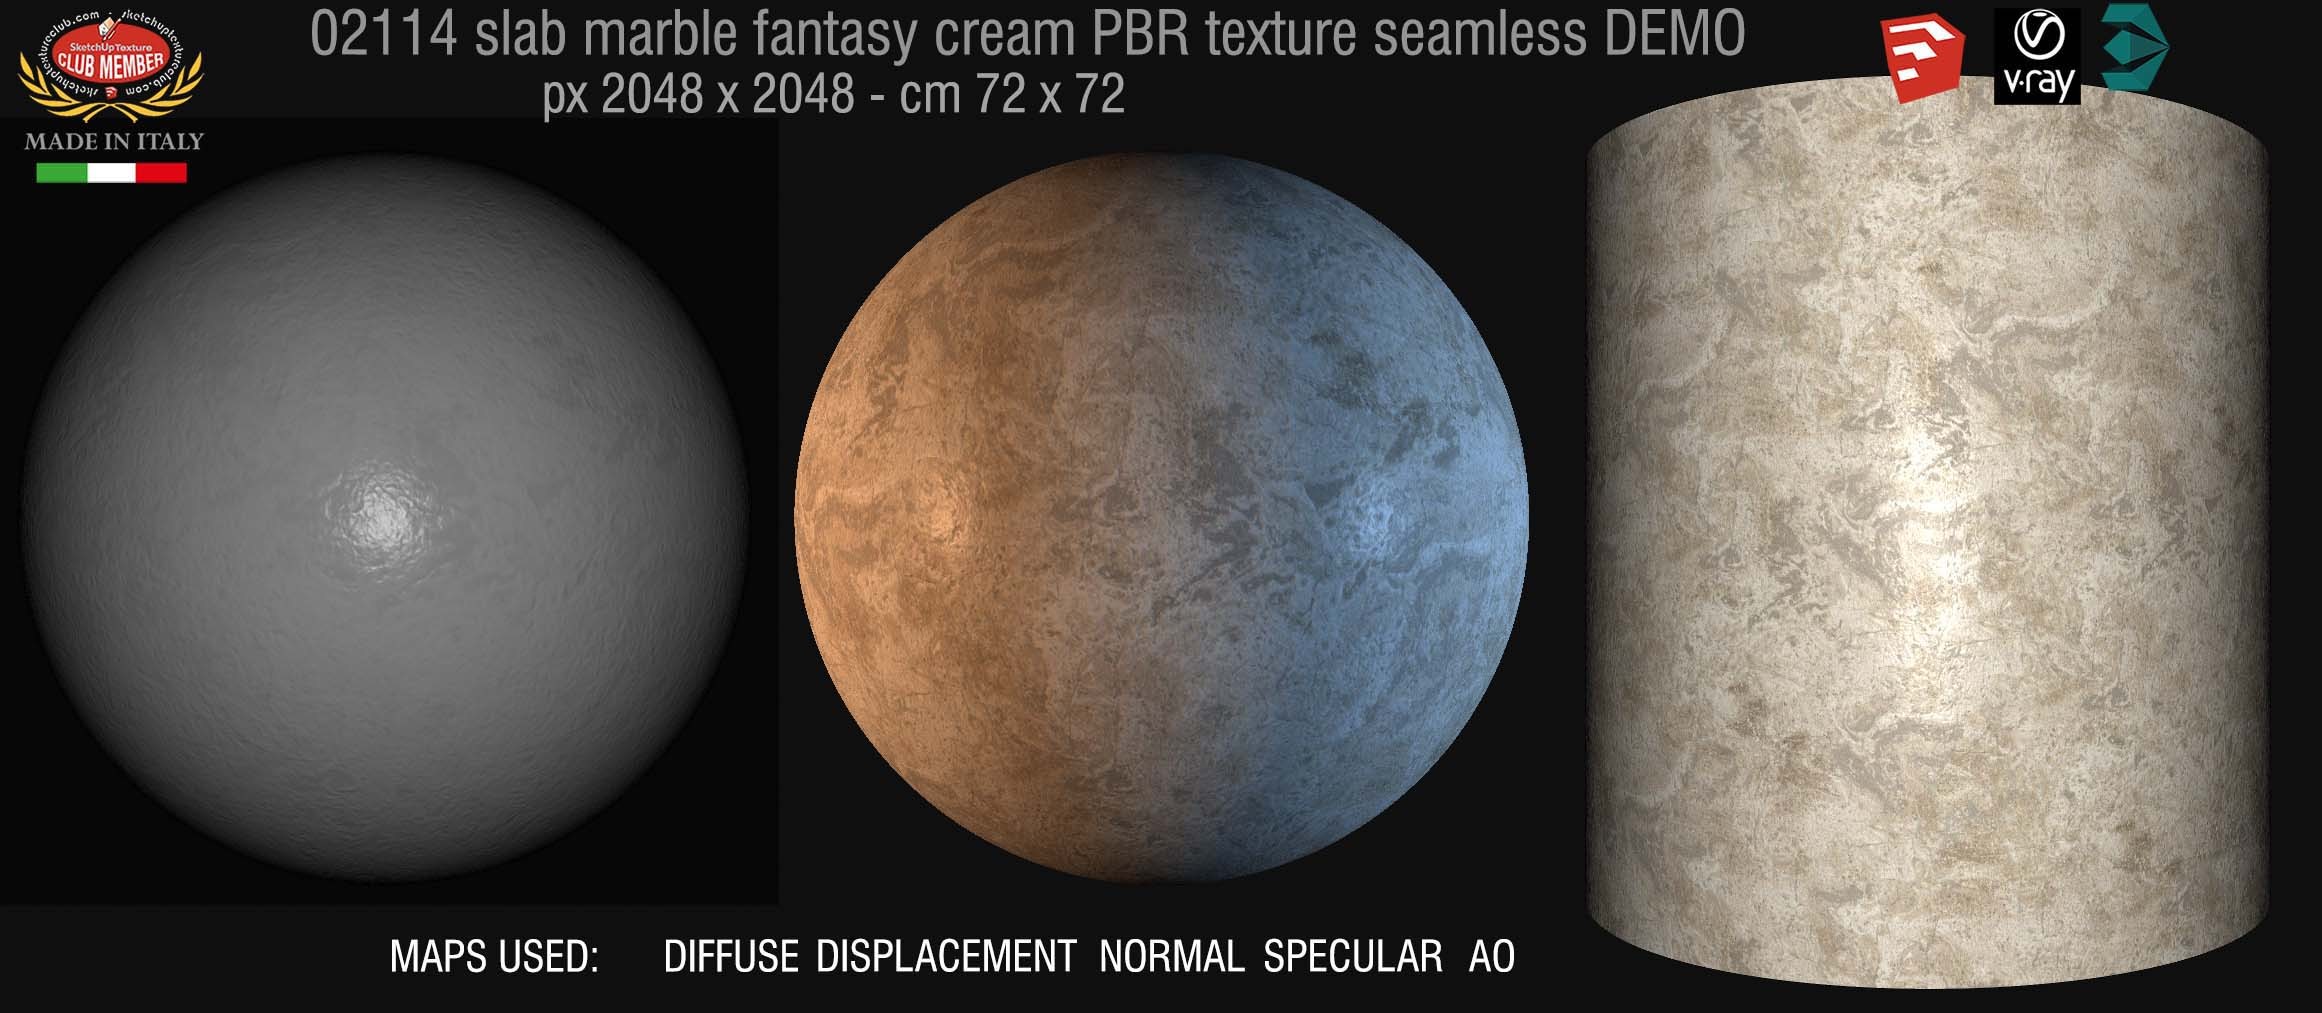 02114 slab marble fantasy cream texture seamless DEMO